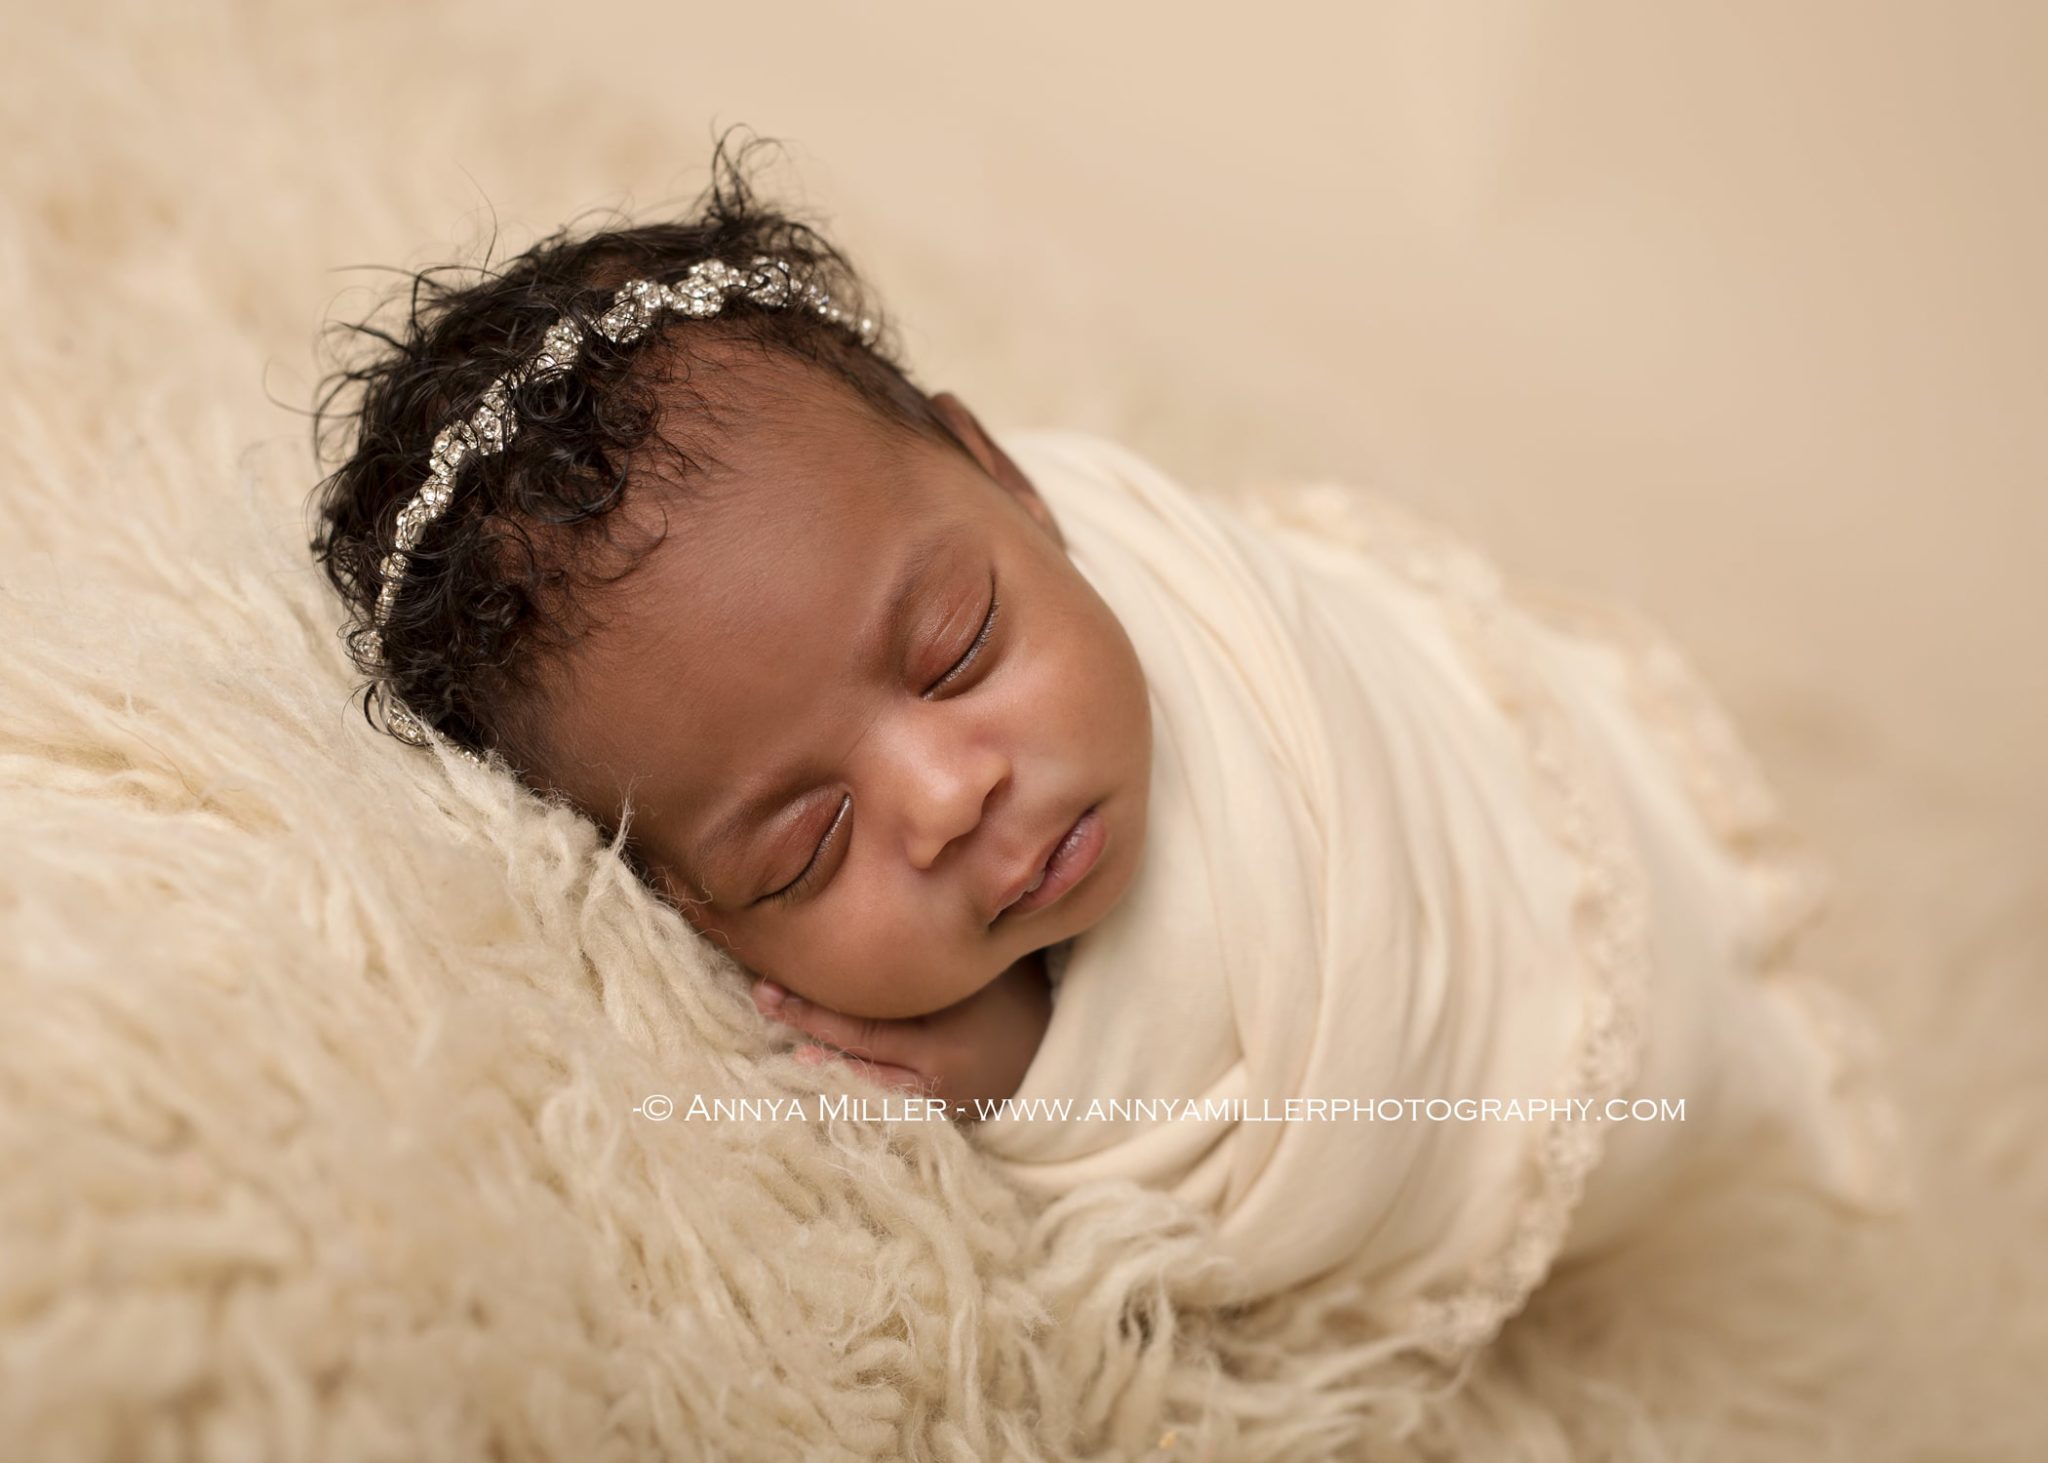 Newborn portraits by local newborn photographer Annya Miller